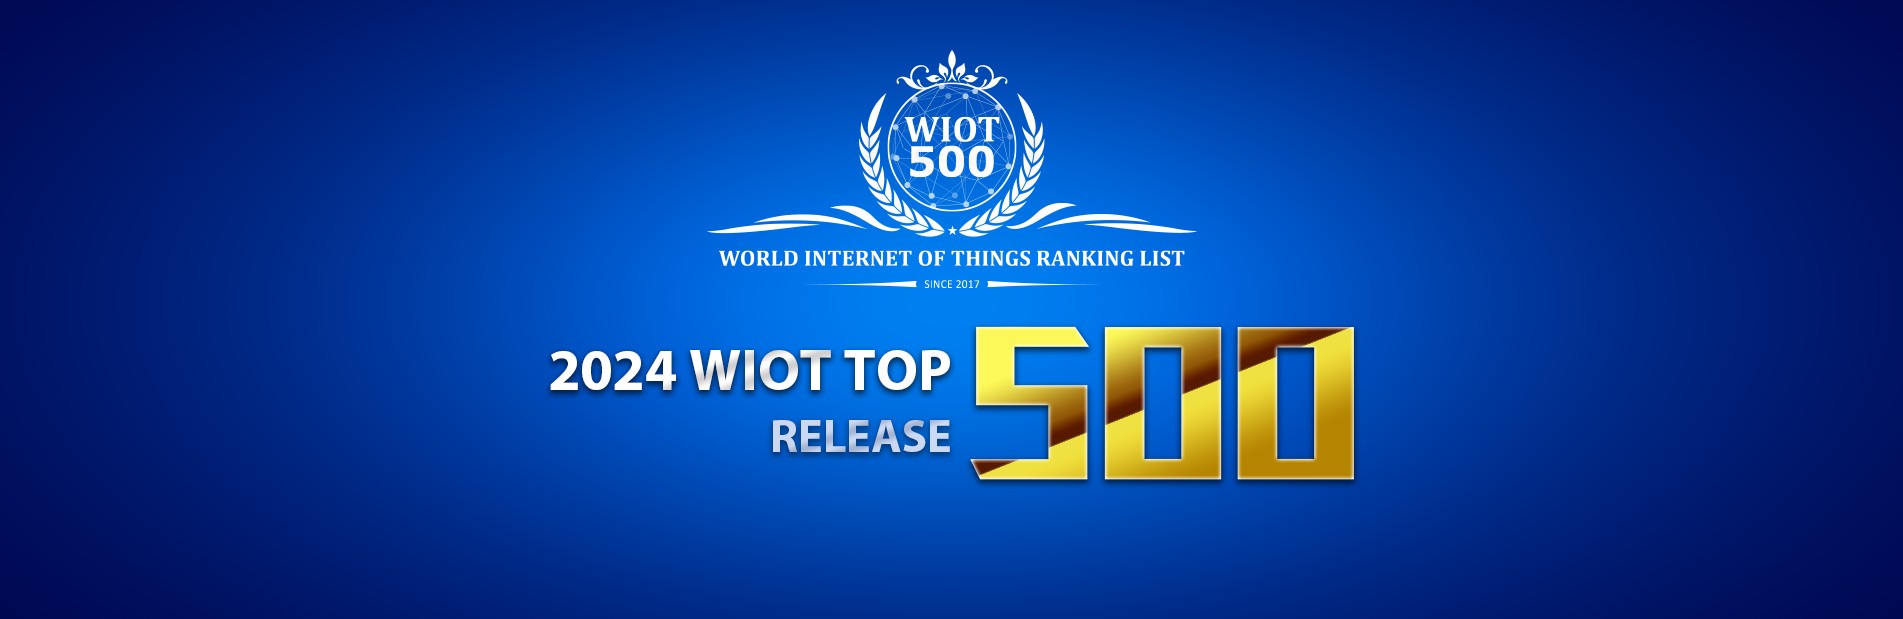 2024 World IoT Ranking List Top 500 Release